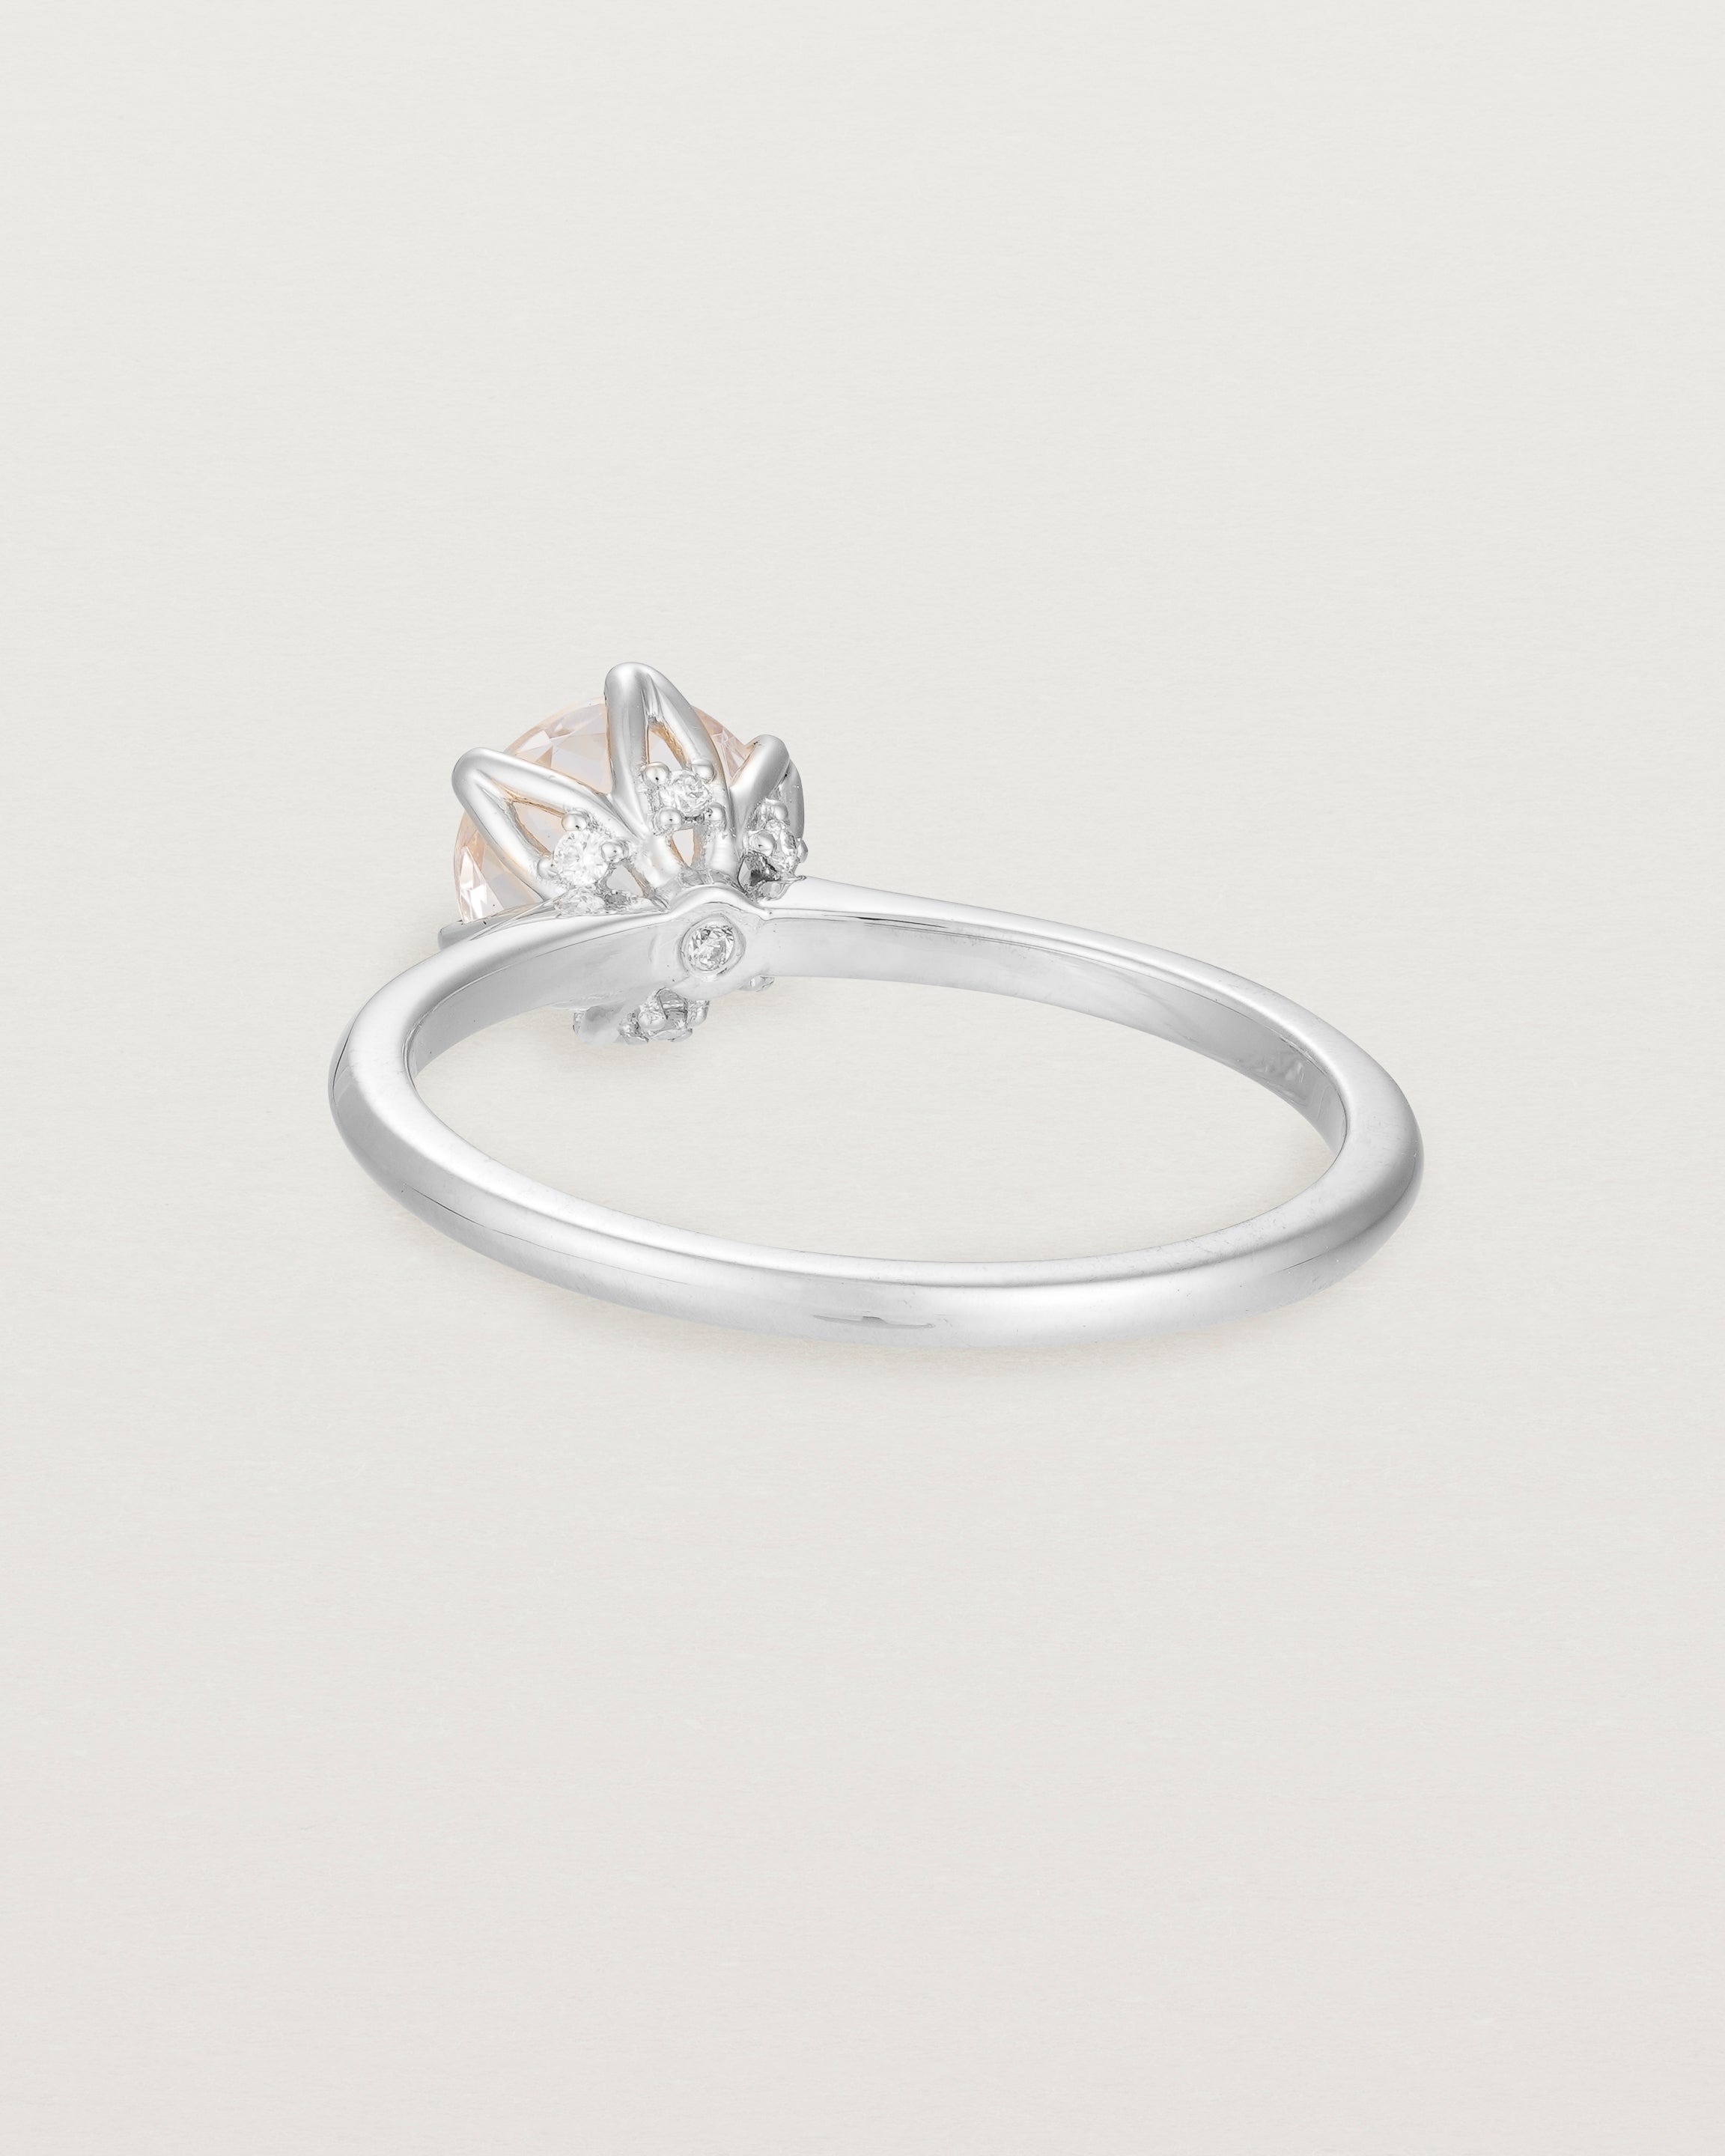 Back view of the Mandala Solitaire Ring | Morganite & Diamonds | White Gold.